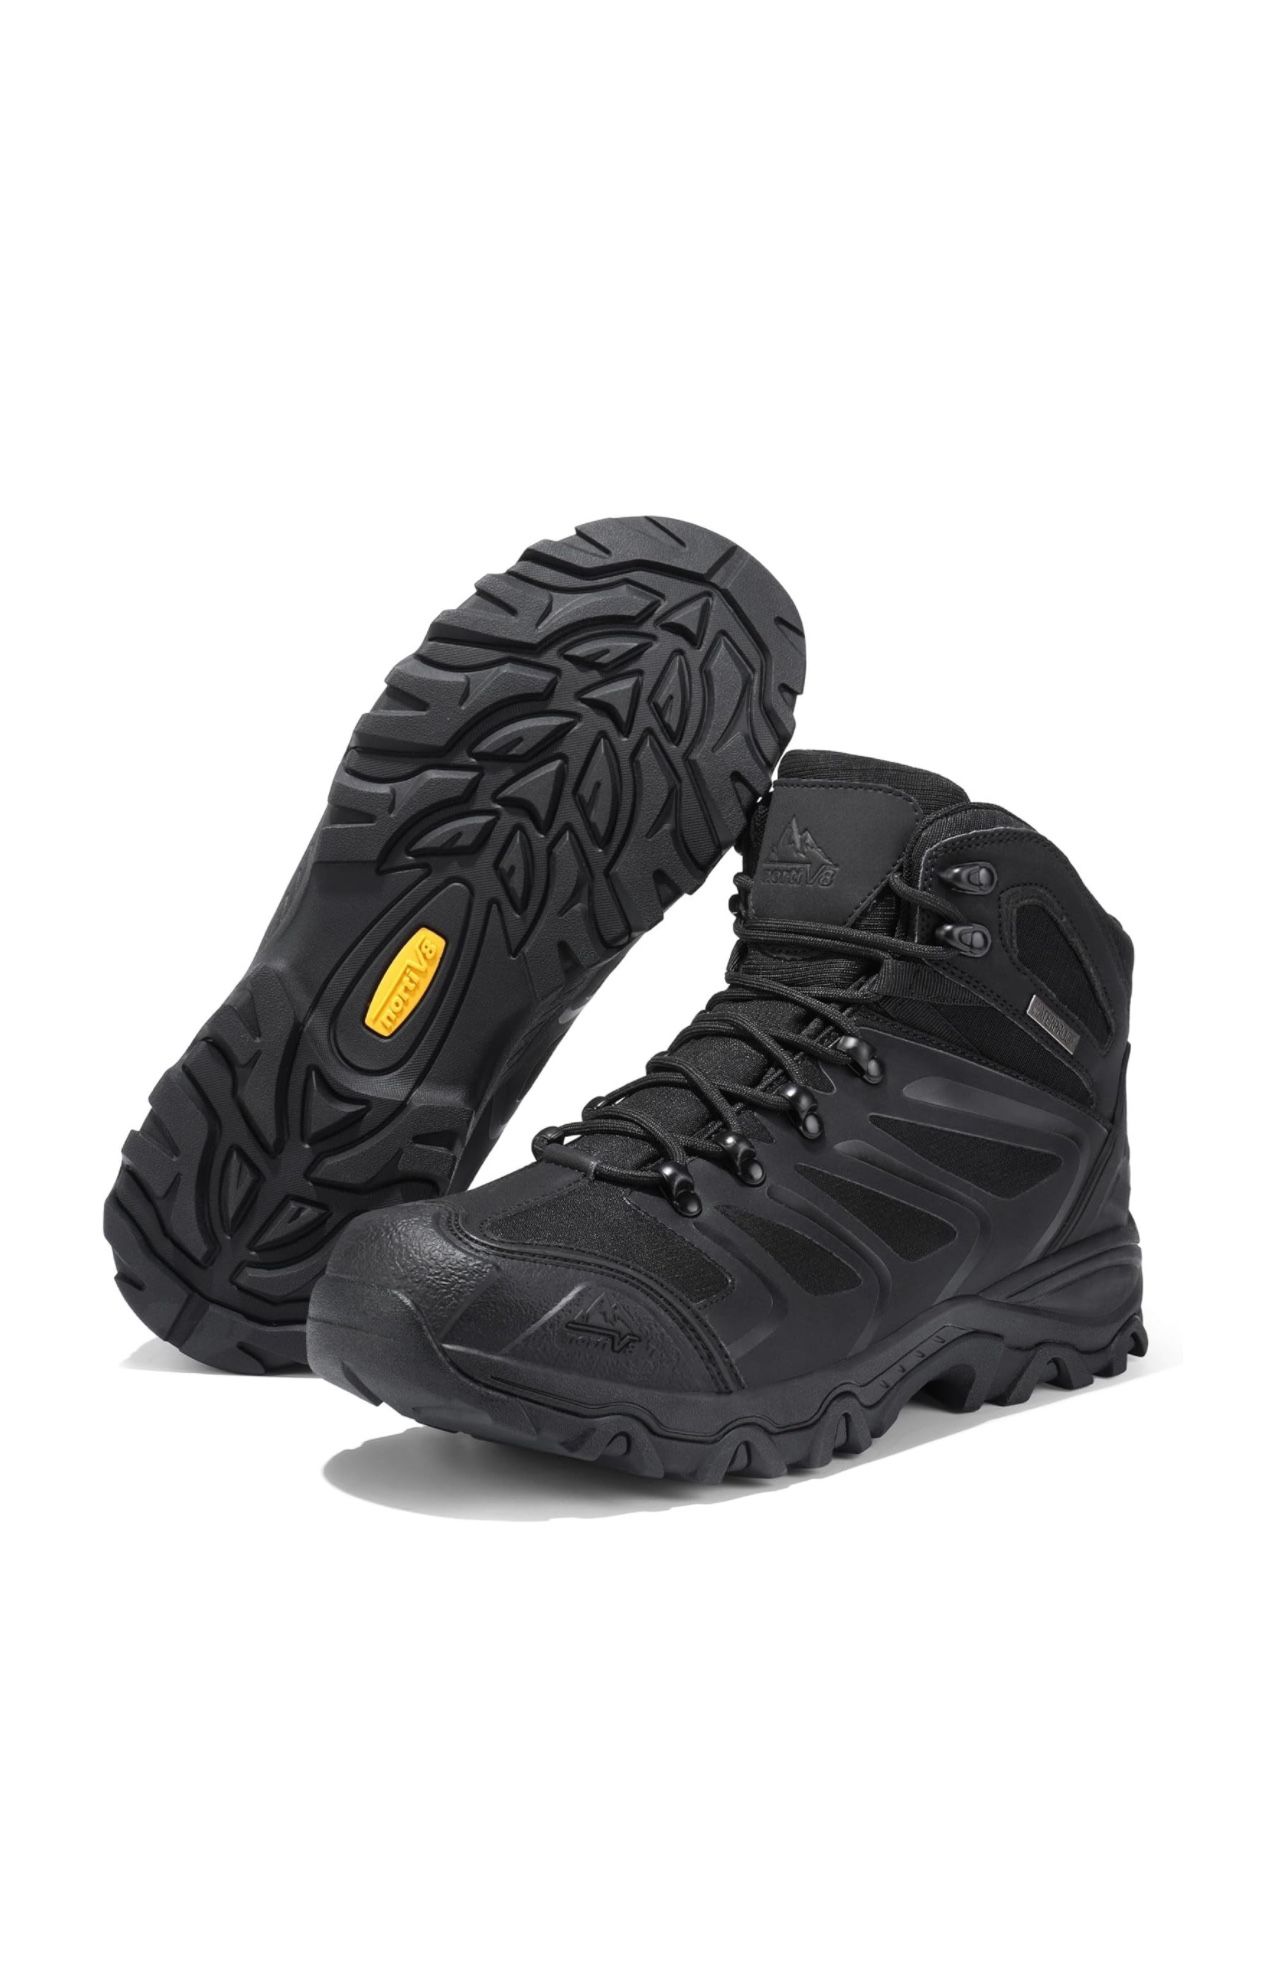 Waterproof Hiking Boots (Size 11)